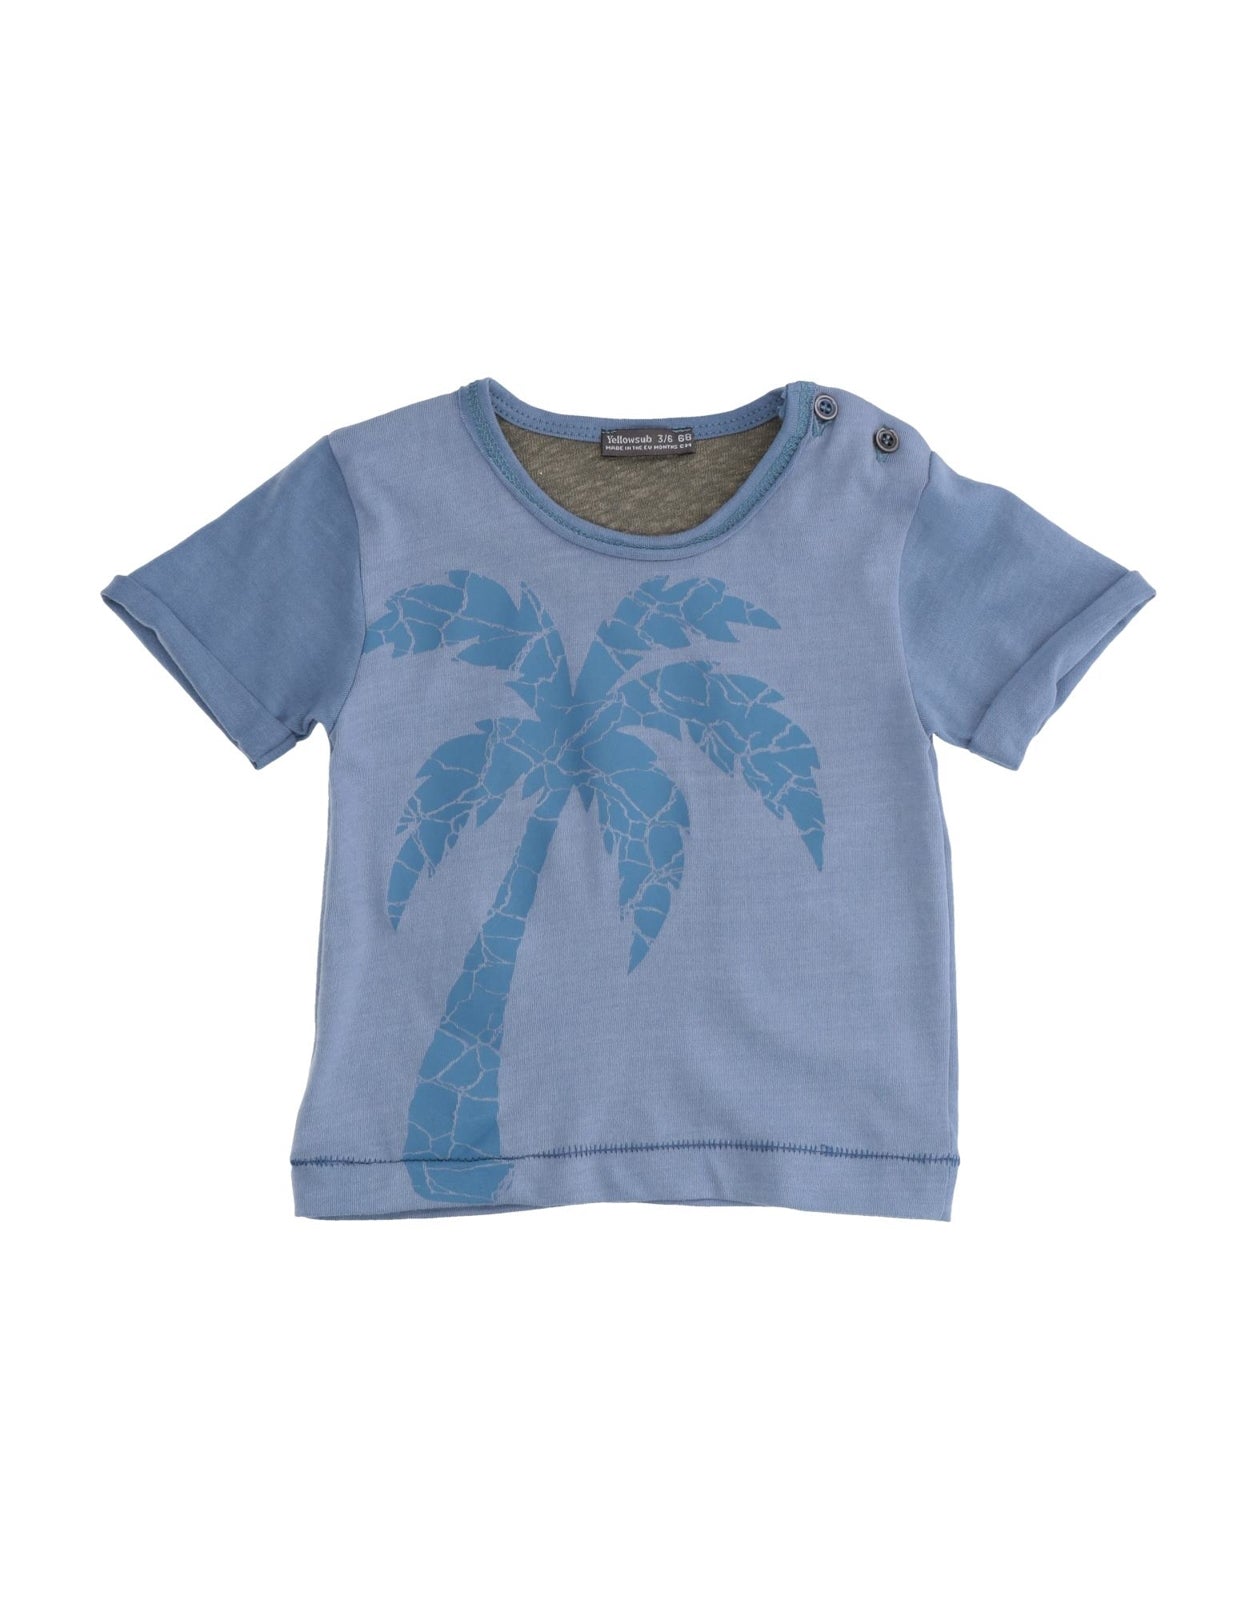 YELLOWSUB T-Shirt Top Size 18-24M / 92CM Coated Palm Tree gallery main photo